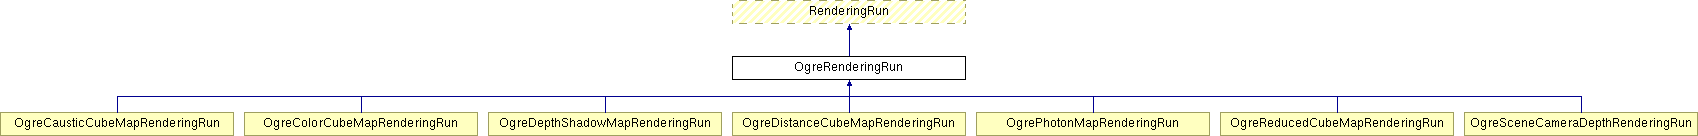 Documentation/D5.3 Stand-alone computation package for illumination algorithms/appendix/IlluminationModule/html/class_ogre_rendering_run.png